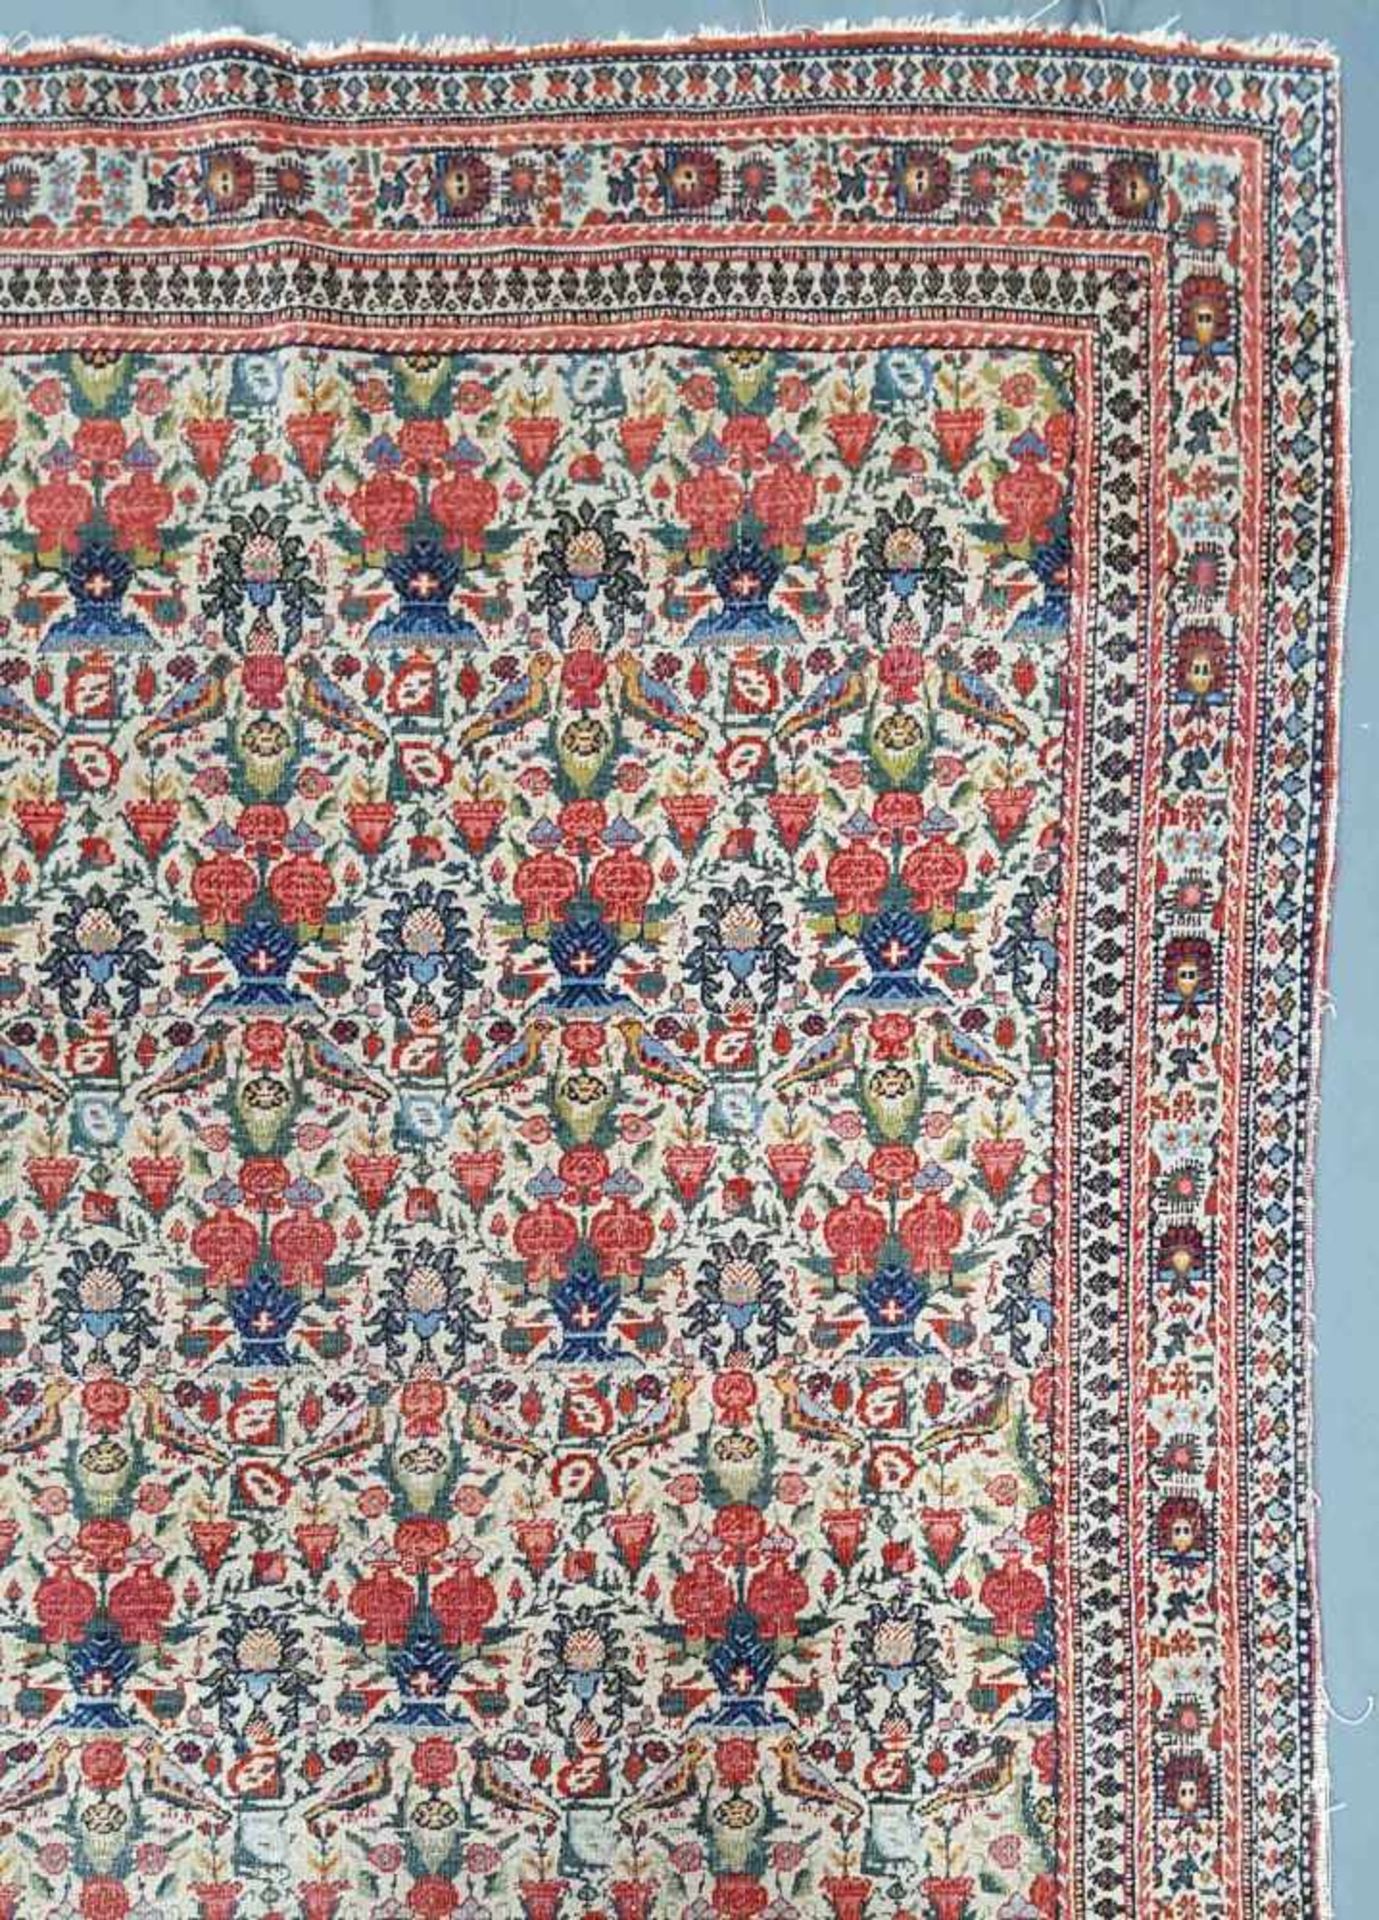 Tehran Persian carpet. "Zili - Sultani" pattern. Iran. Antique. Around 1900. - Image 5 of 7